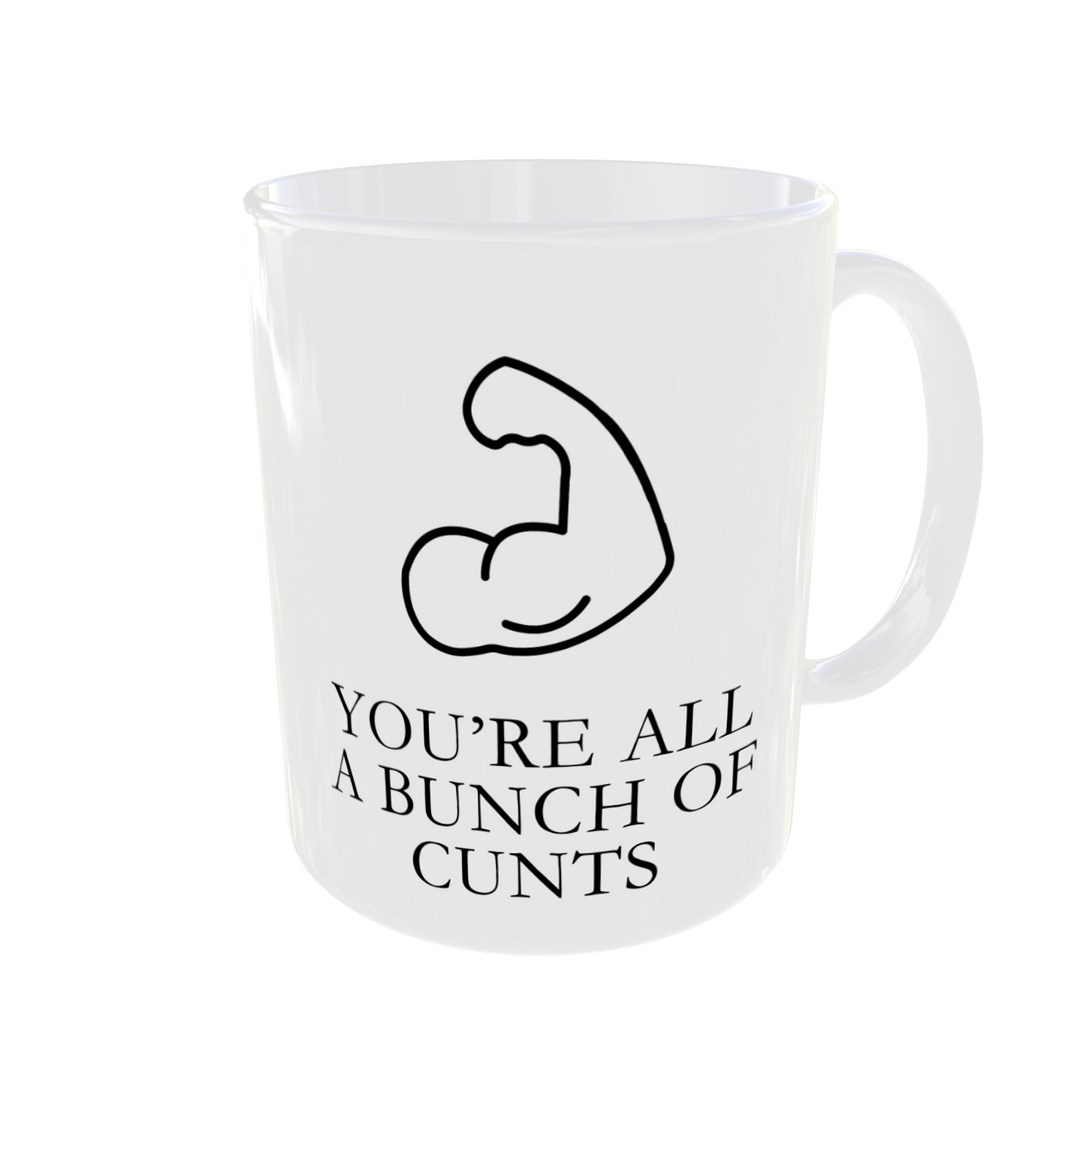 Customise Your Own Mug!